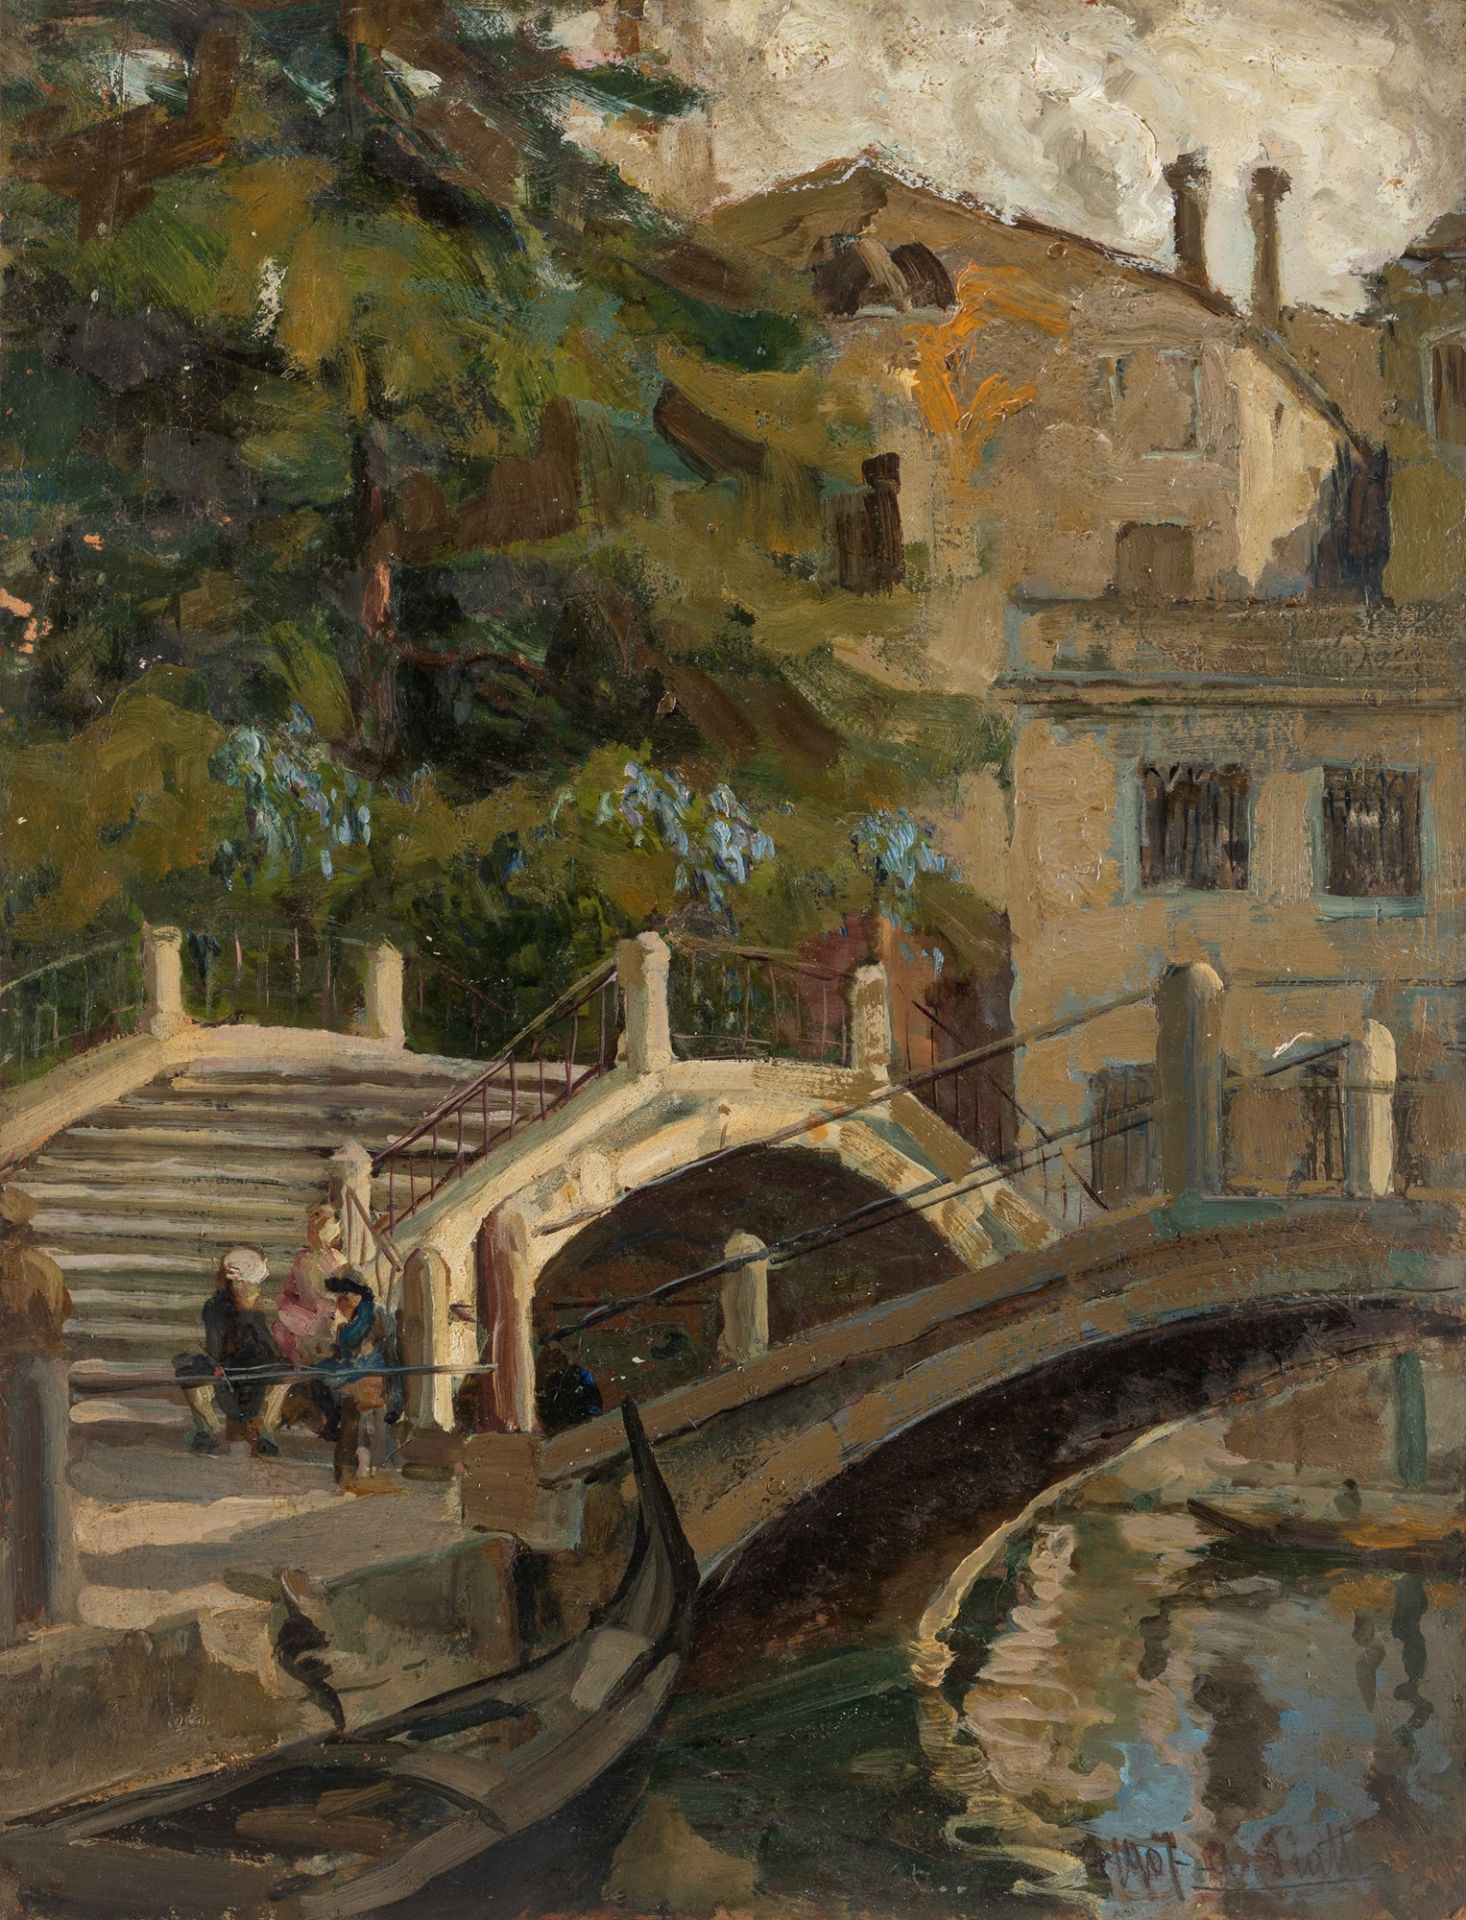 Antonio Piatti (Viggiù 1875-1962) - "Venice", 1907